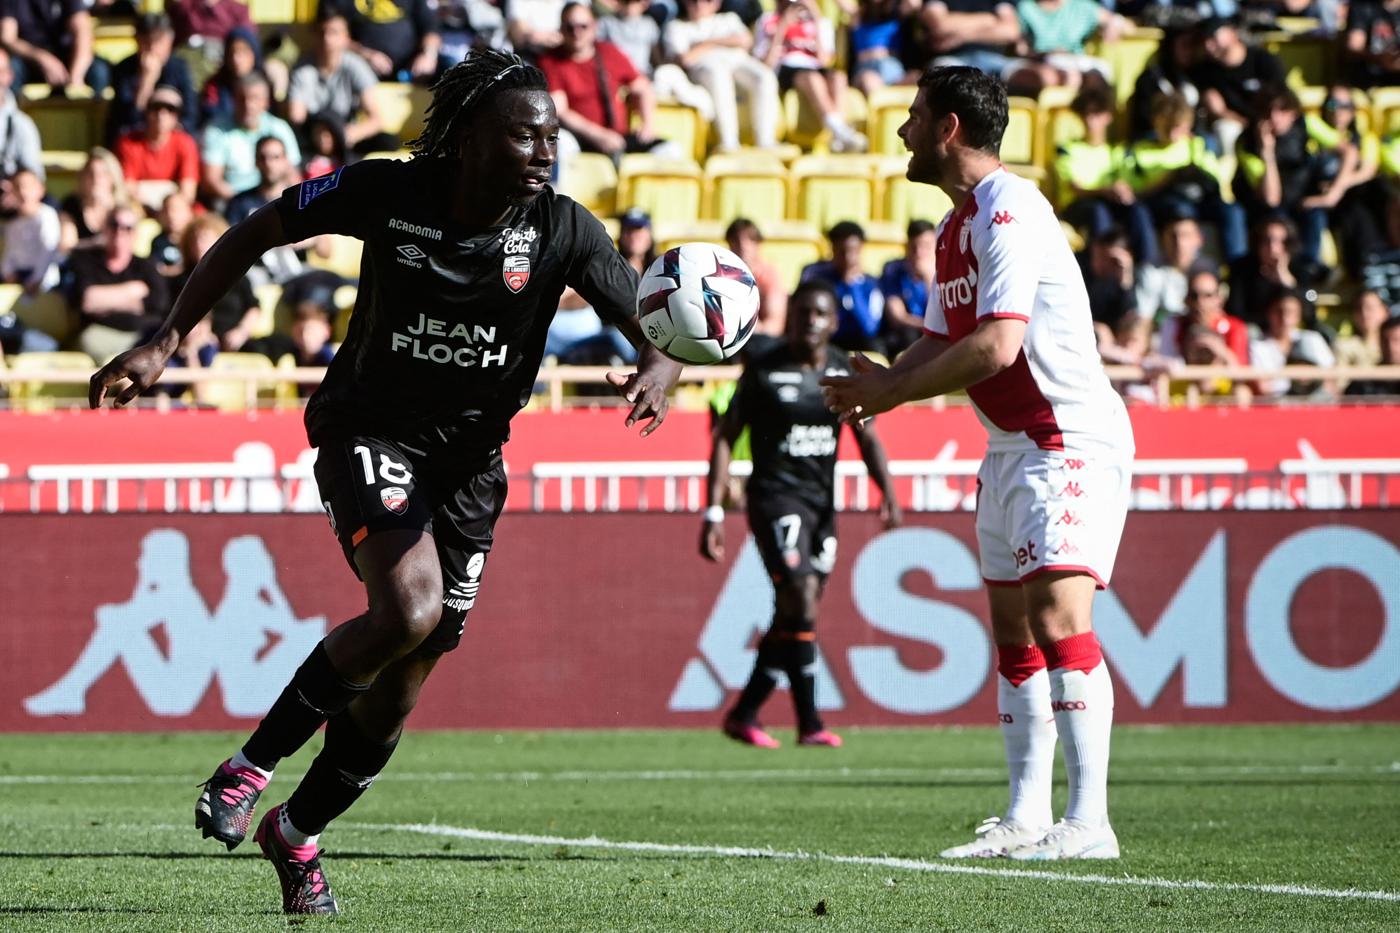 statistics Monaco - Lorient - 3:1. French Championship, round 31. Match review,